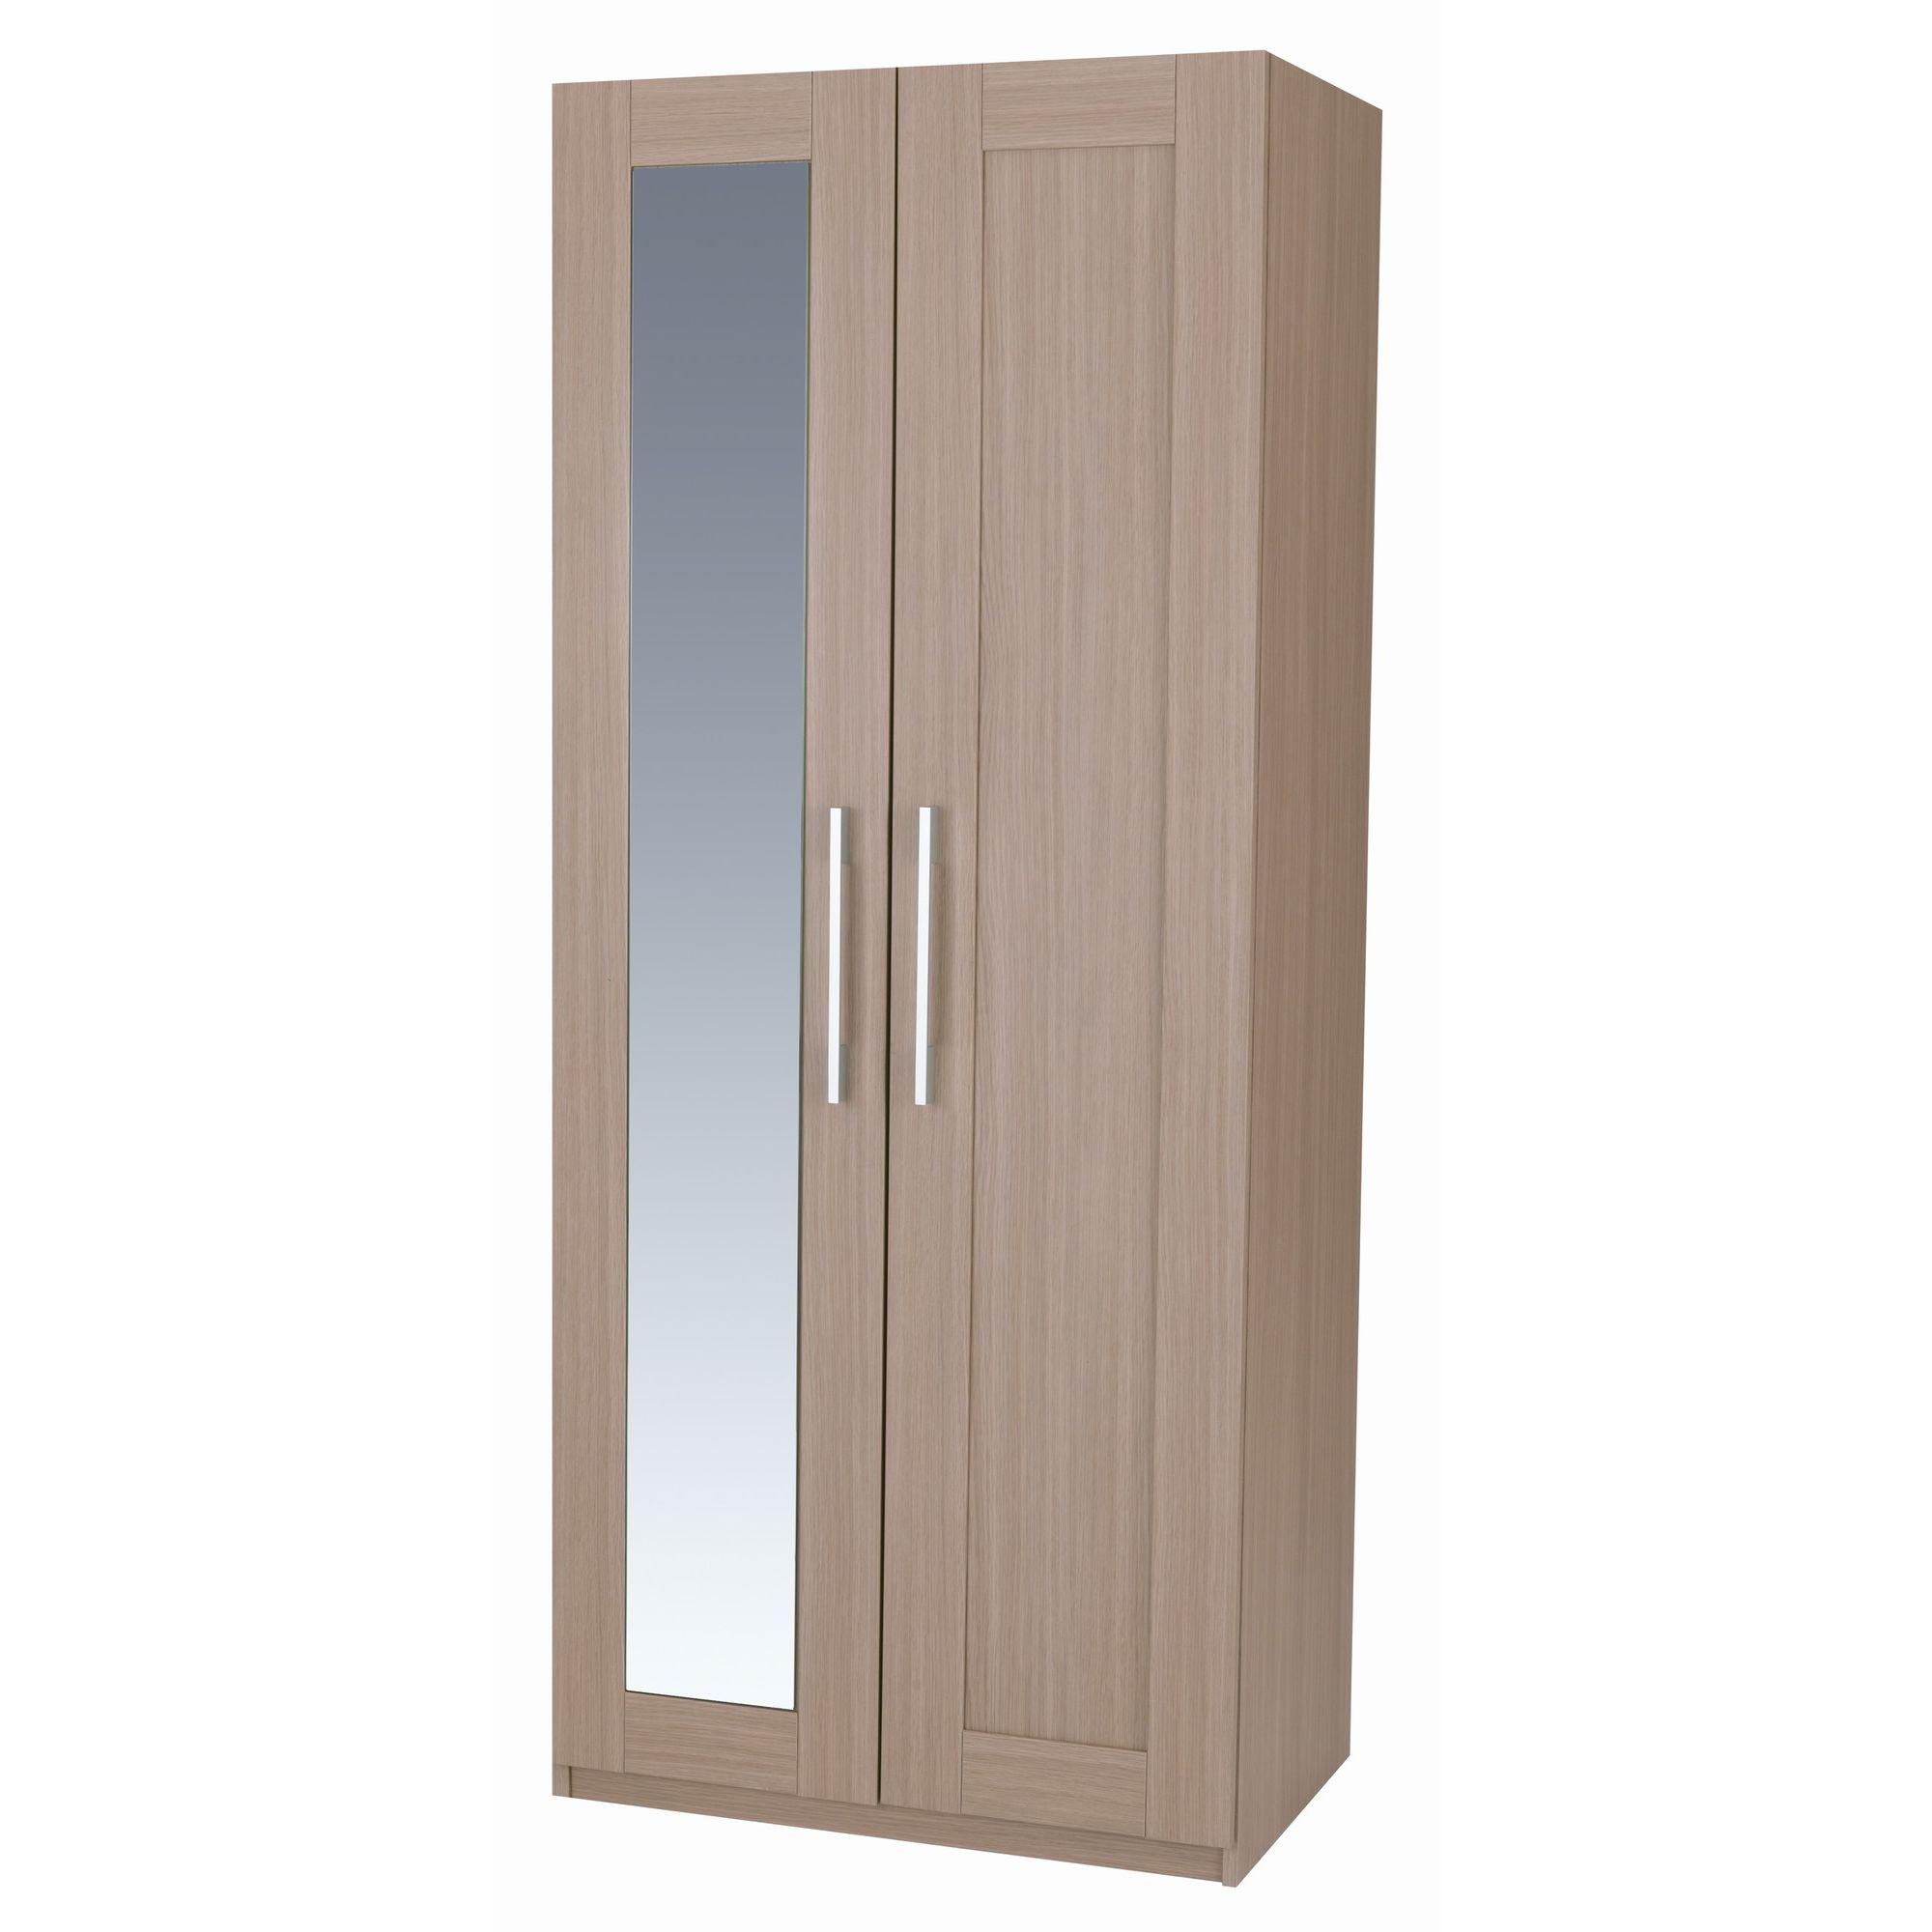 Alto Furniture Visualise Shaker Wardrobe with Mirror in Veradi Oak at Tesco Direct